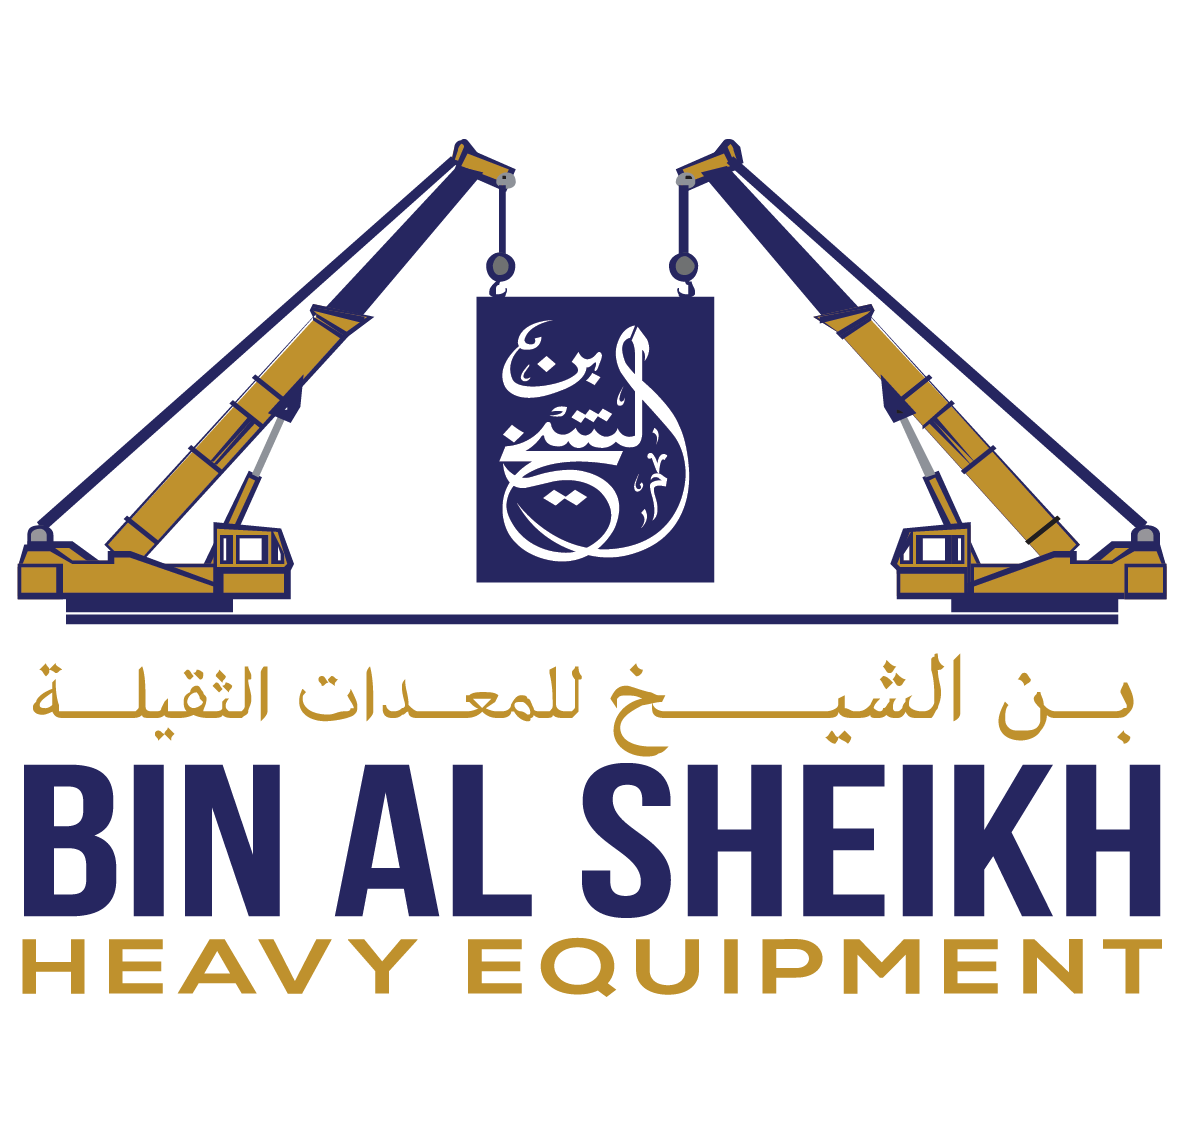 Bin Al Sheikh Heavy Equipment